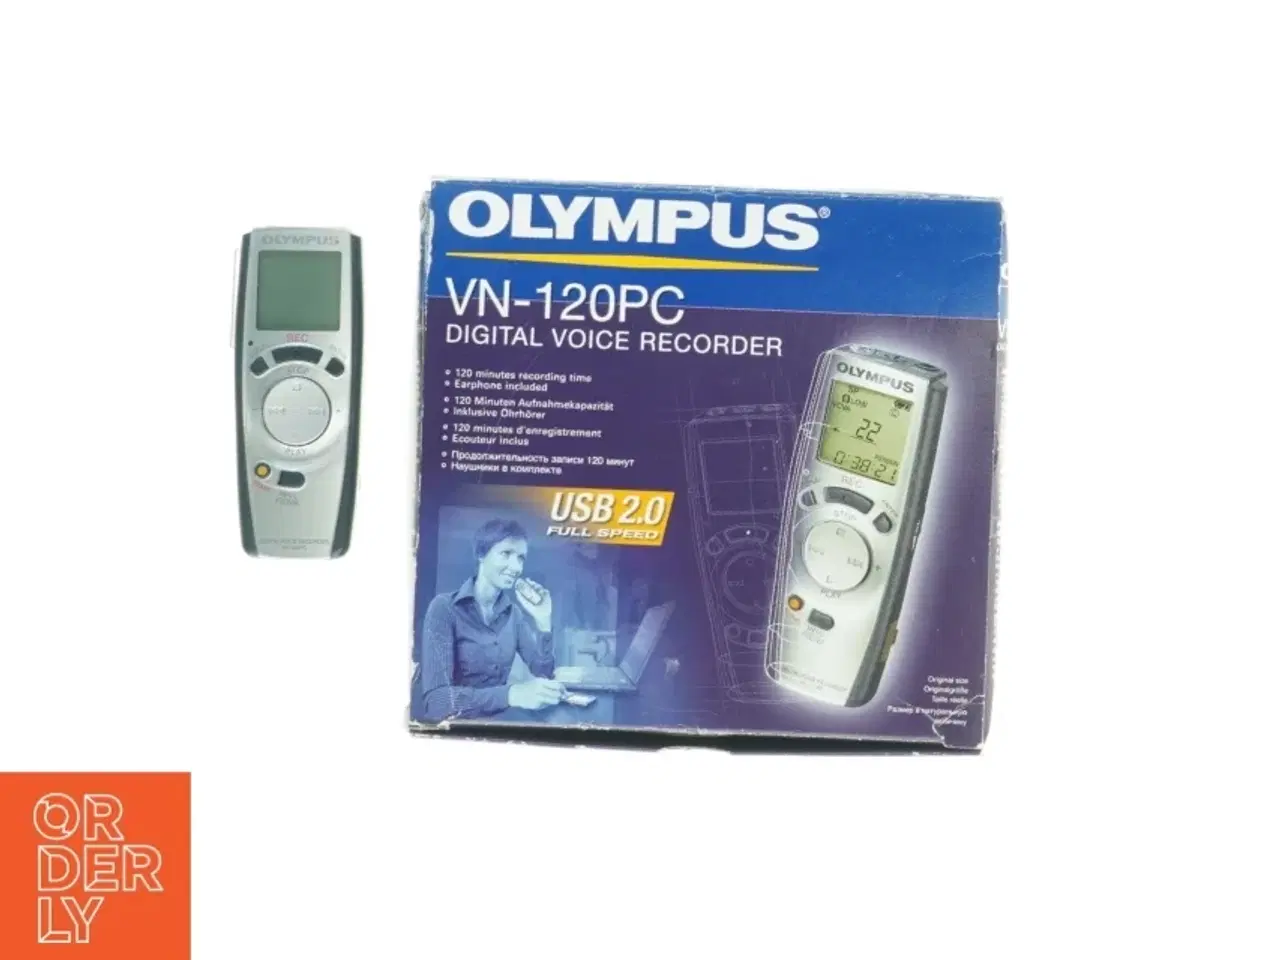 Billede 1 - Olympus VN-120PC Digital Voice Recorder fra Olympus (str. 10 x 4 cm)